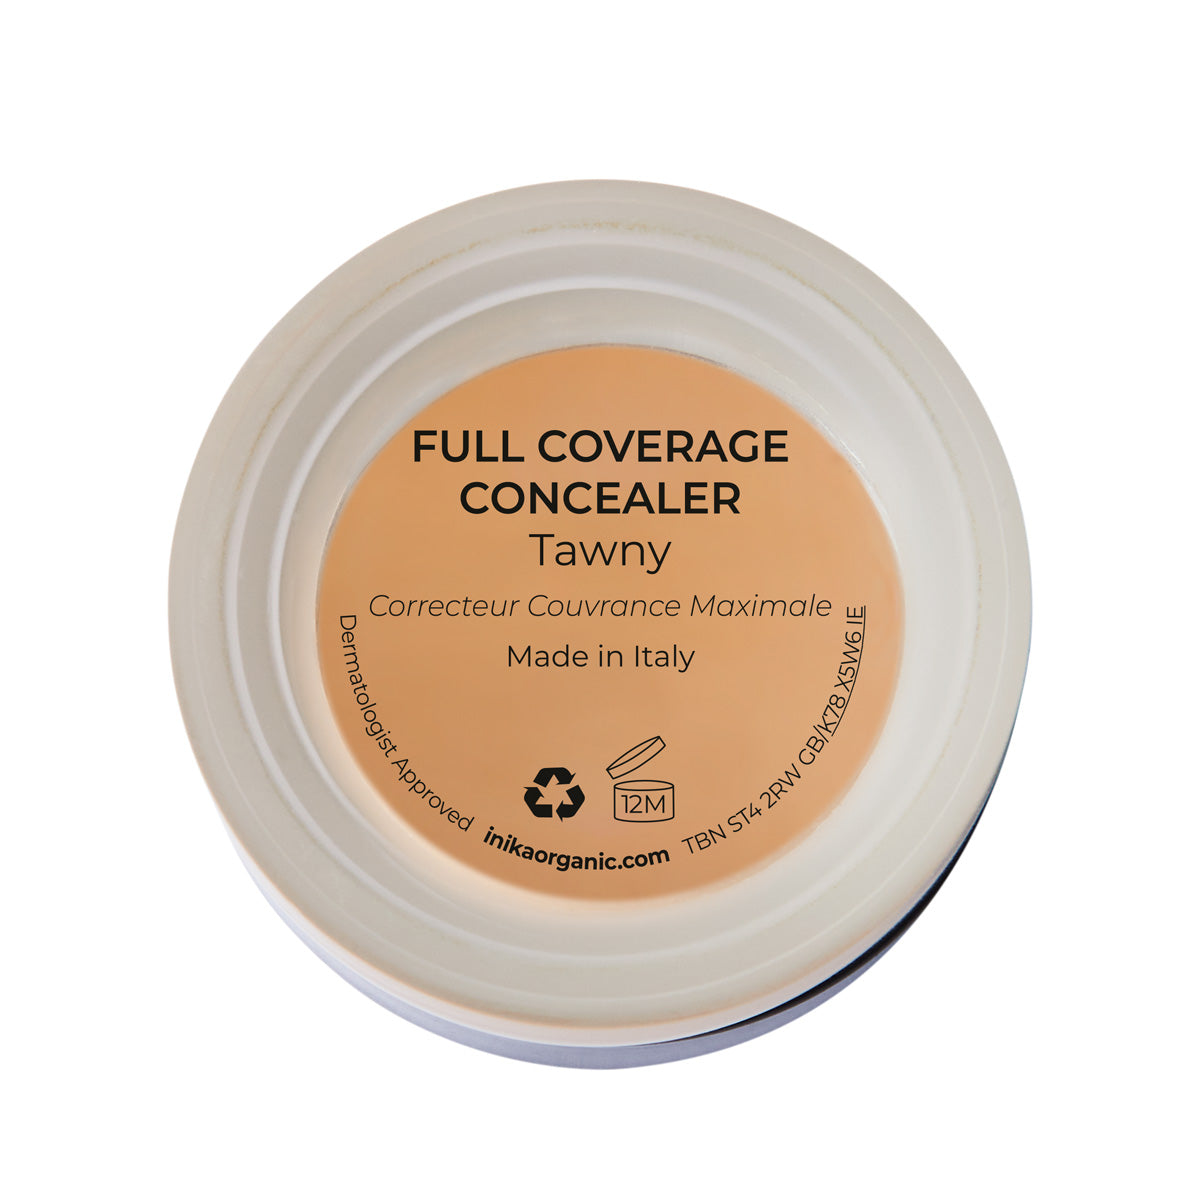 Full Coverage Concealer - Tawny